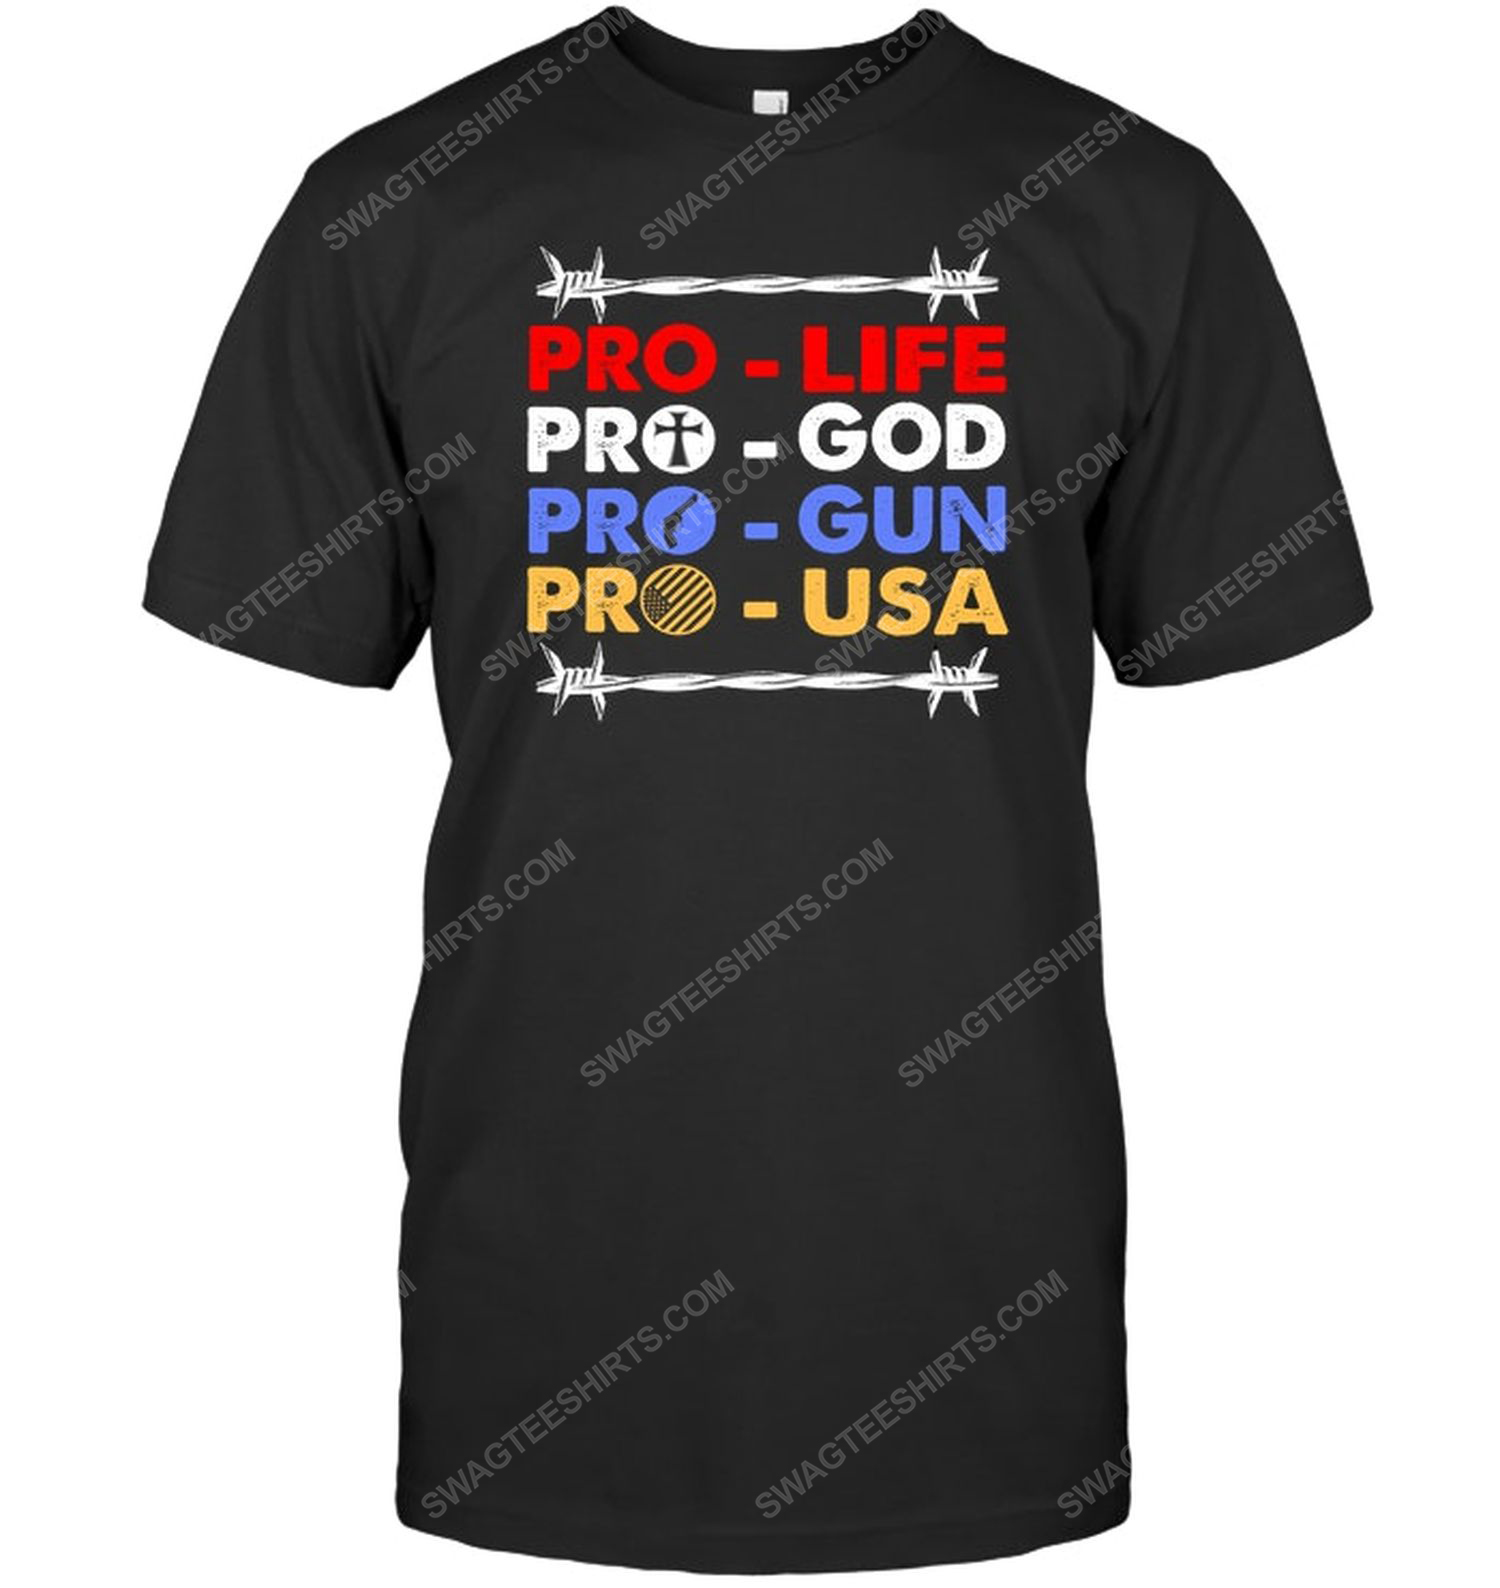 Pro life pro god pro gun pro usa political tshirt